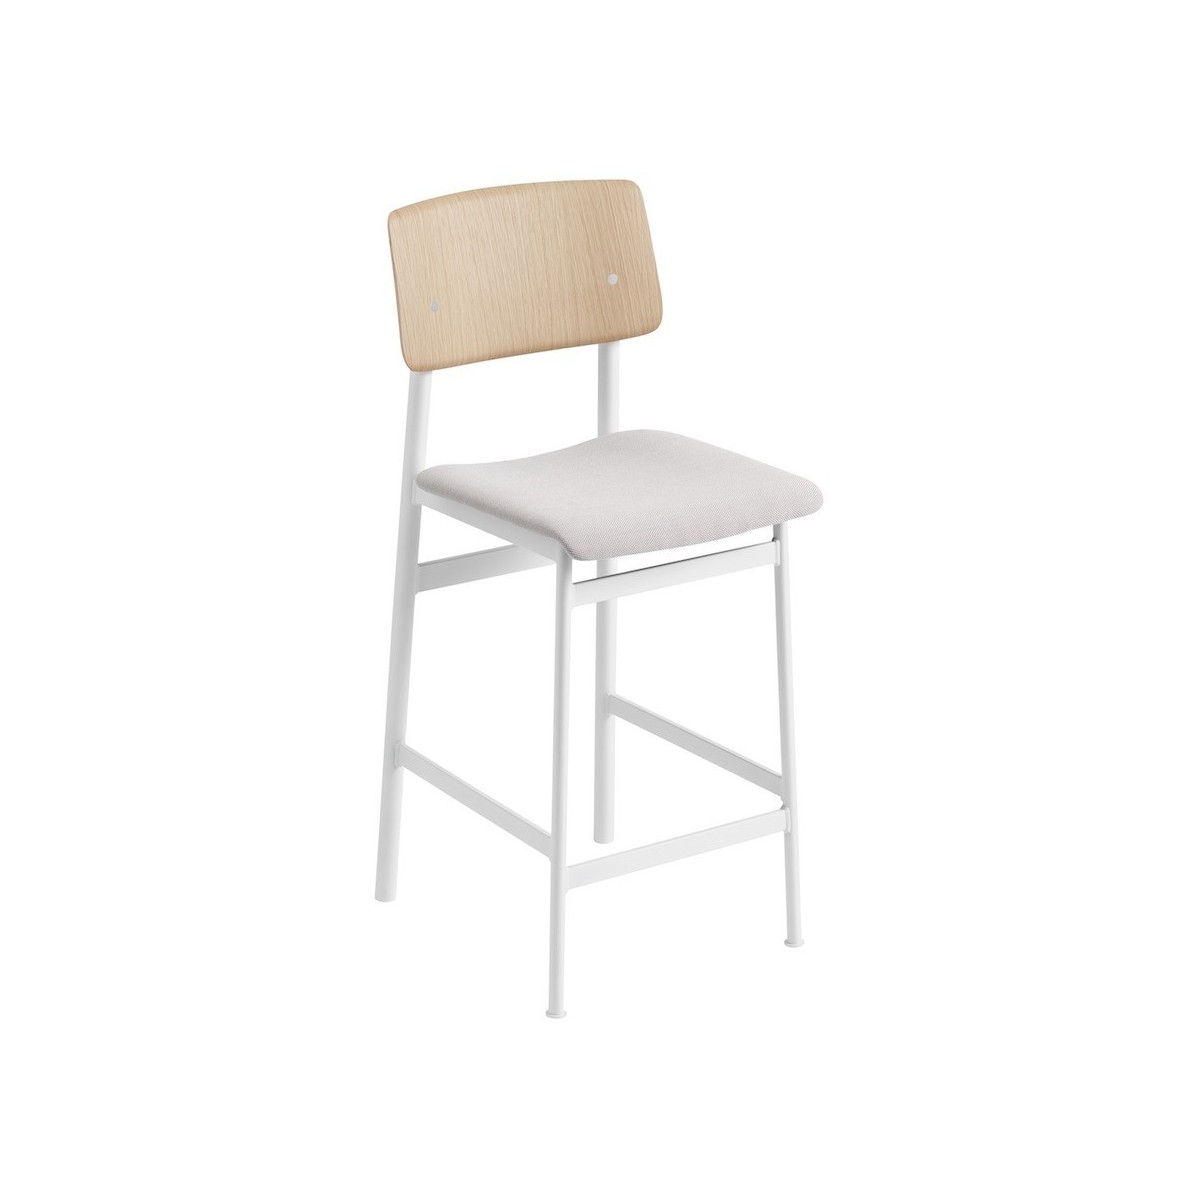 H65cm - Steelcut Trio 205 + white/oak - Loft counter stool